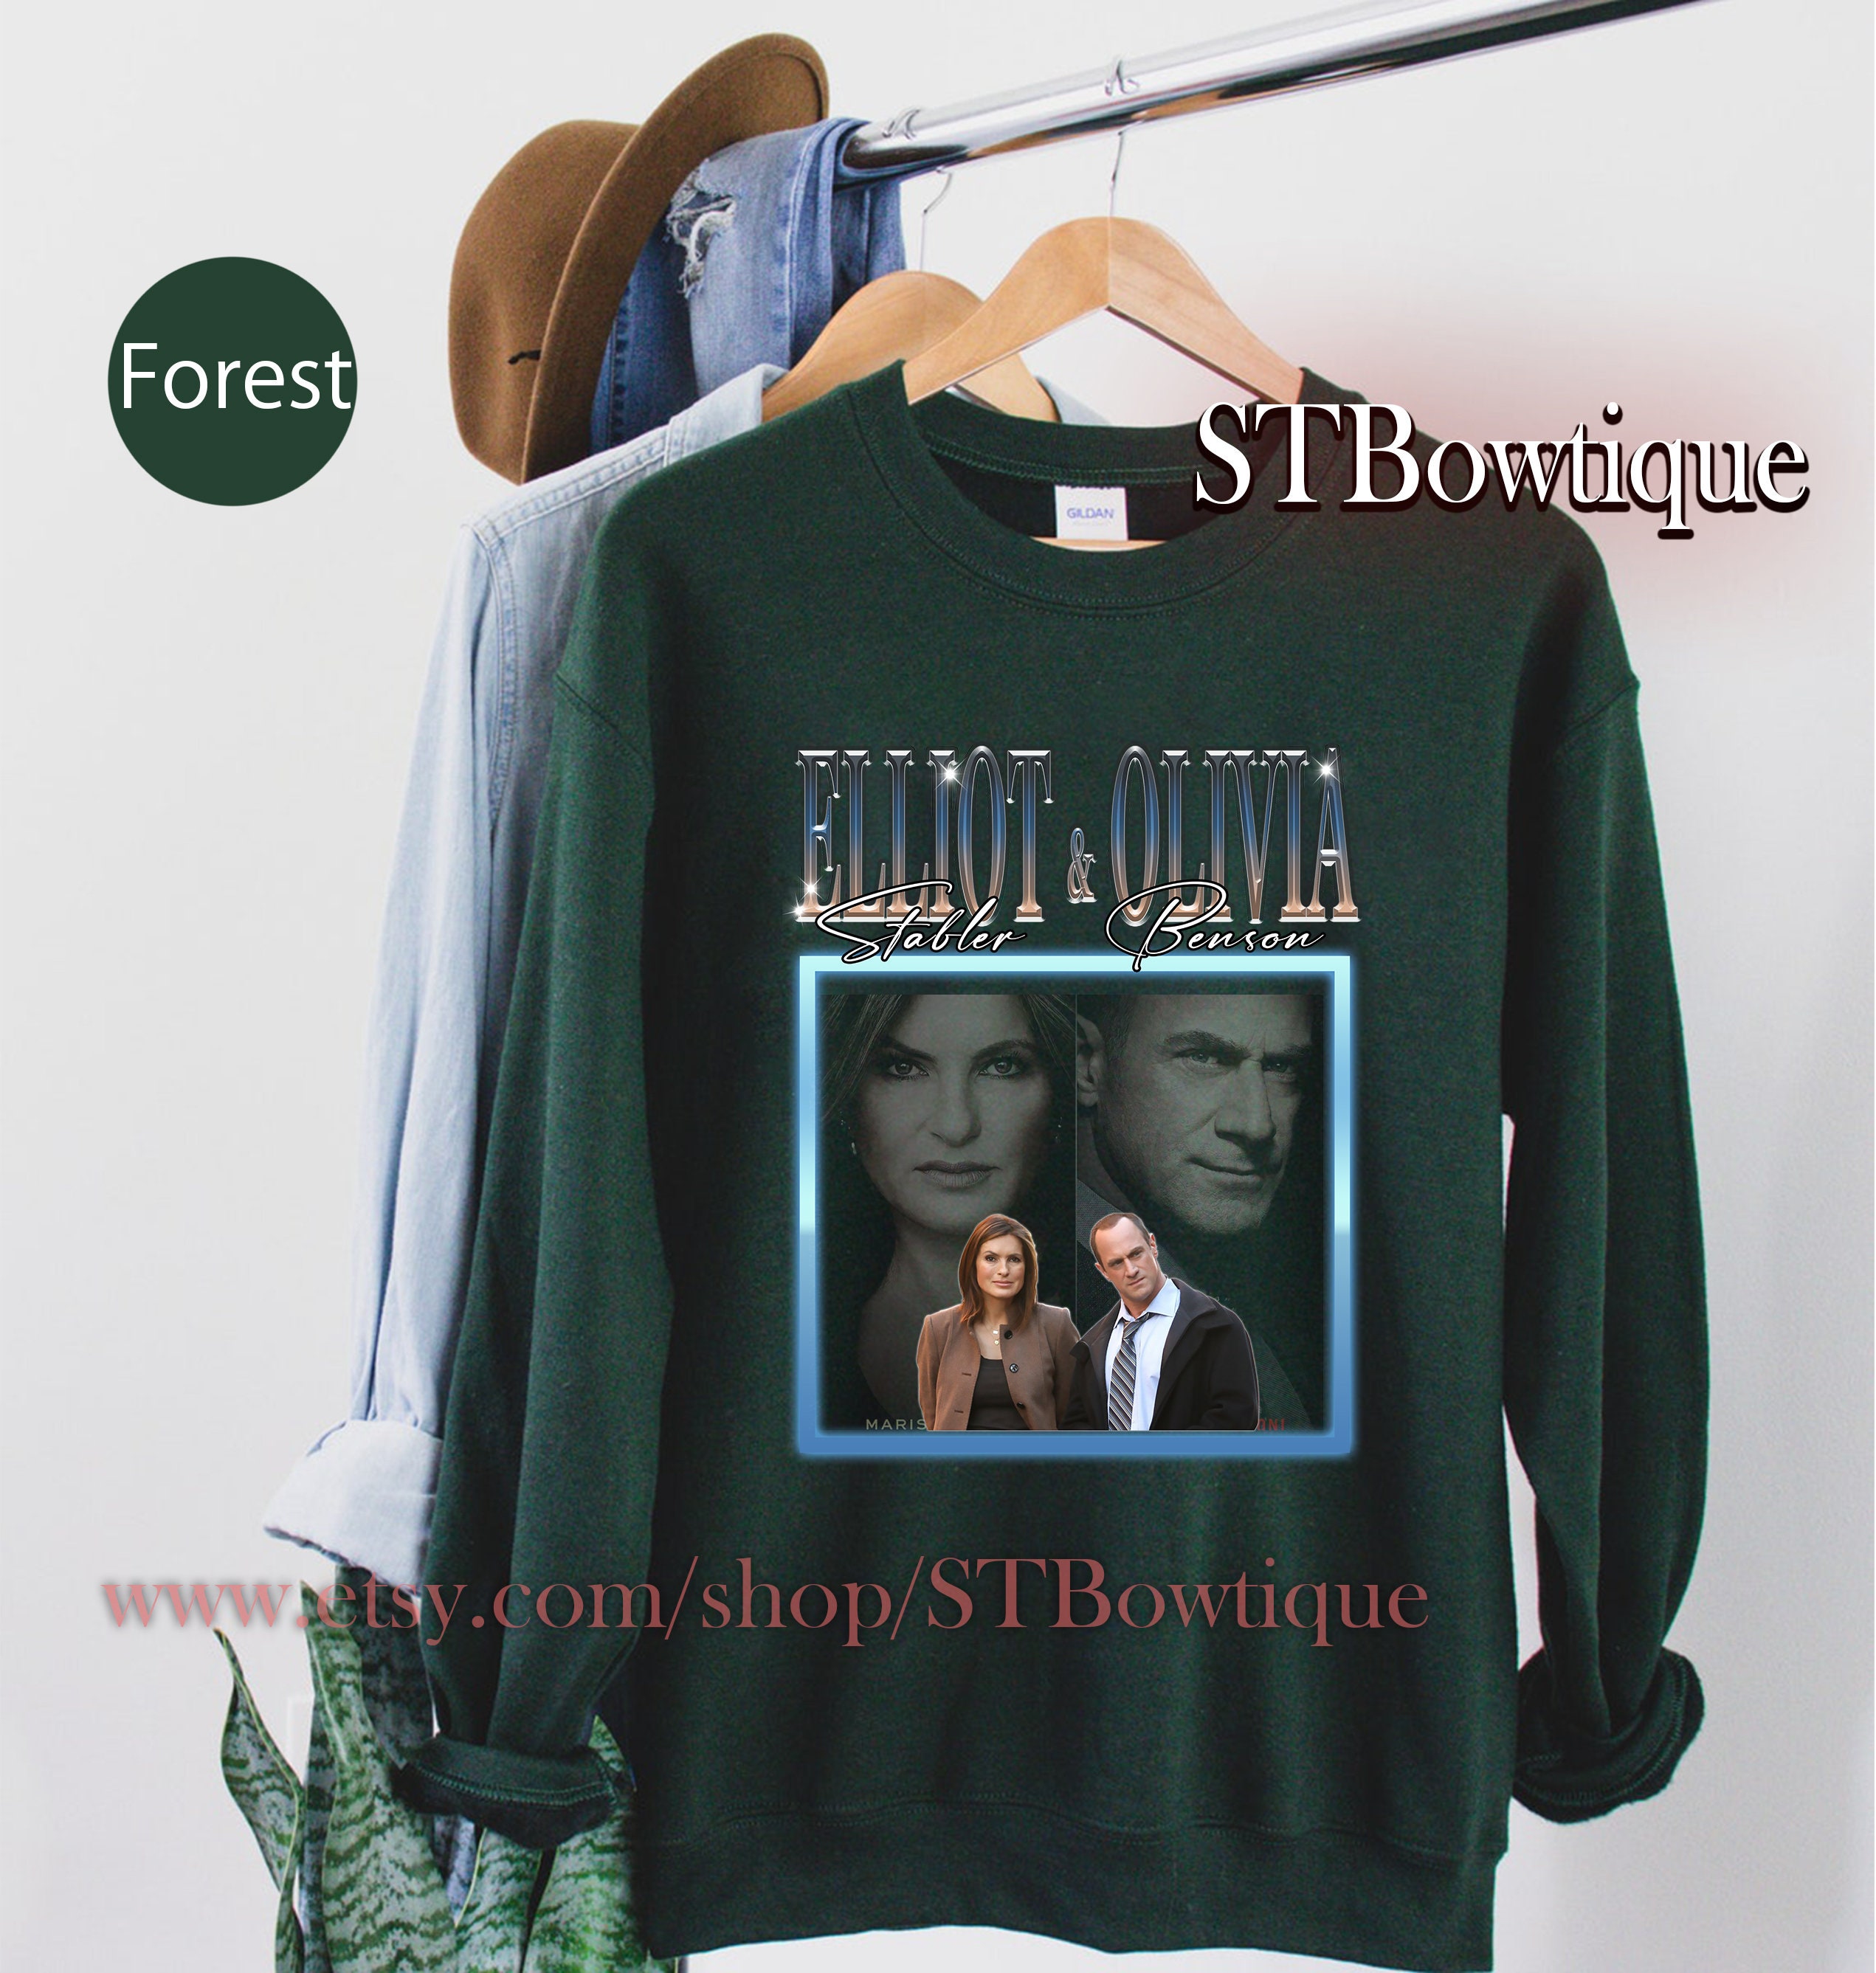 Elliot Stabler And Olivia Benson Vintage 90s Law And Order Svu Couple Unisex T-Shirt